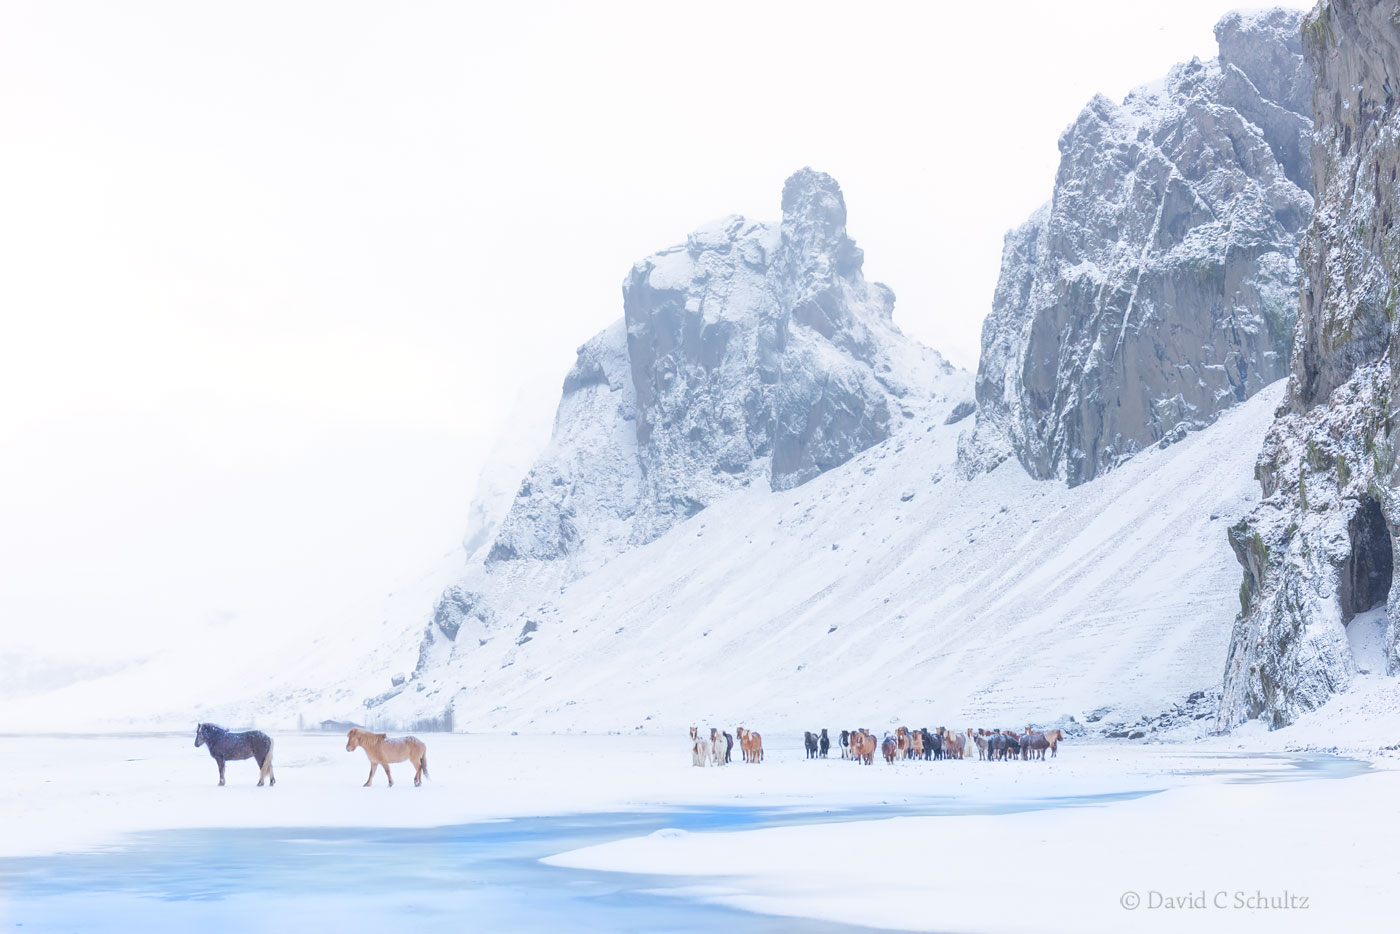 Winter and Icelandic Horses - Image #47-2843